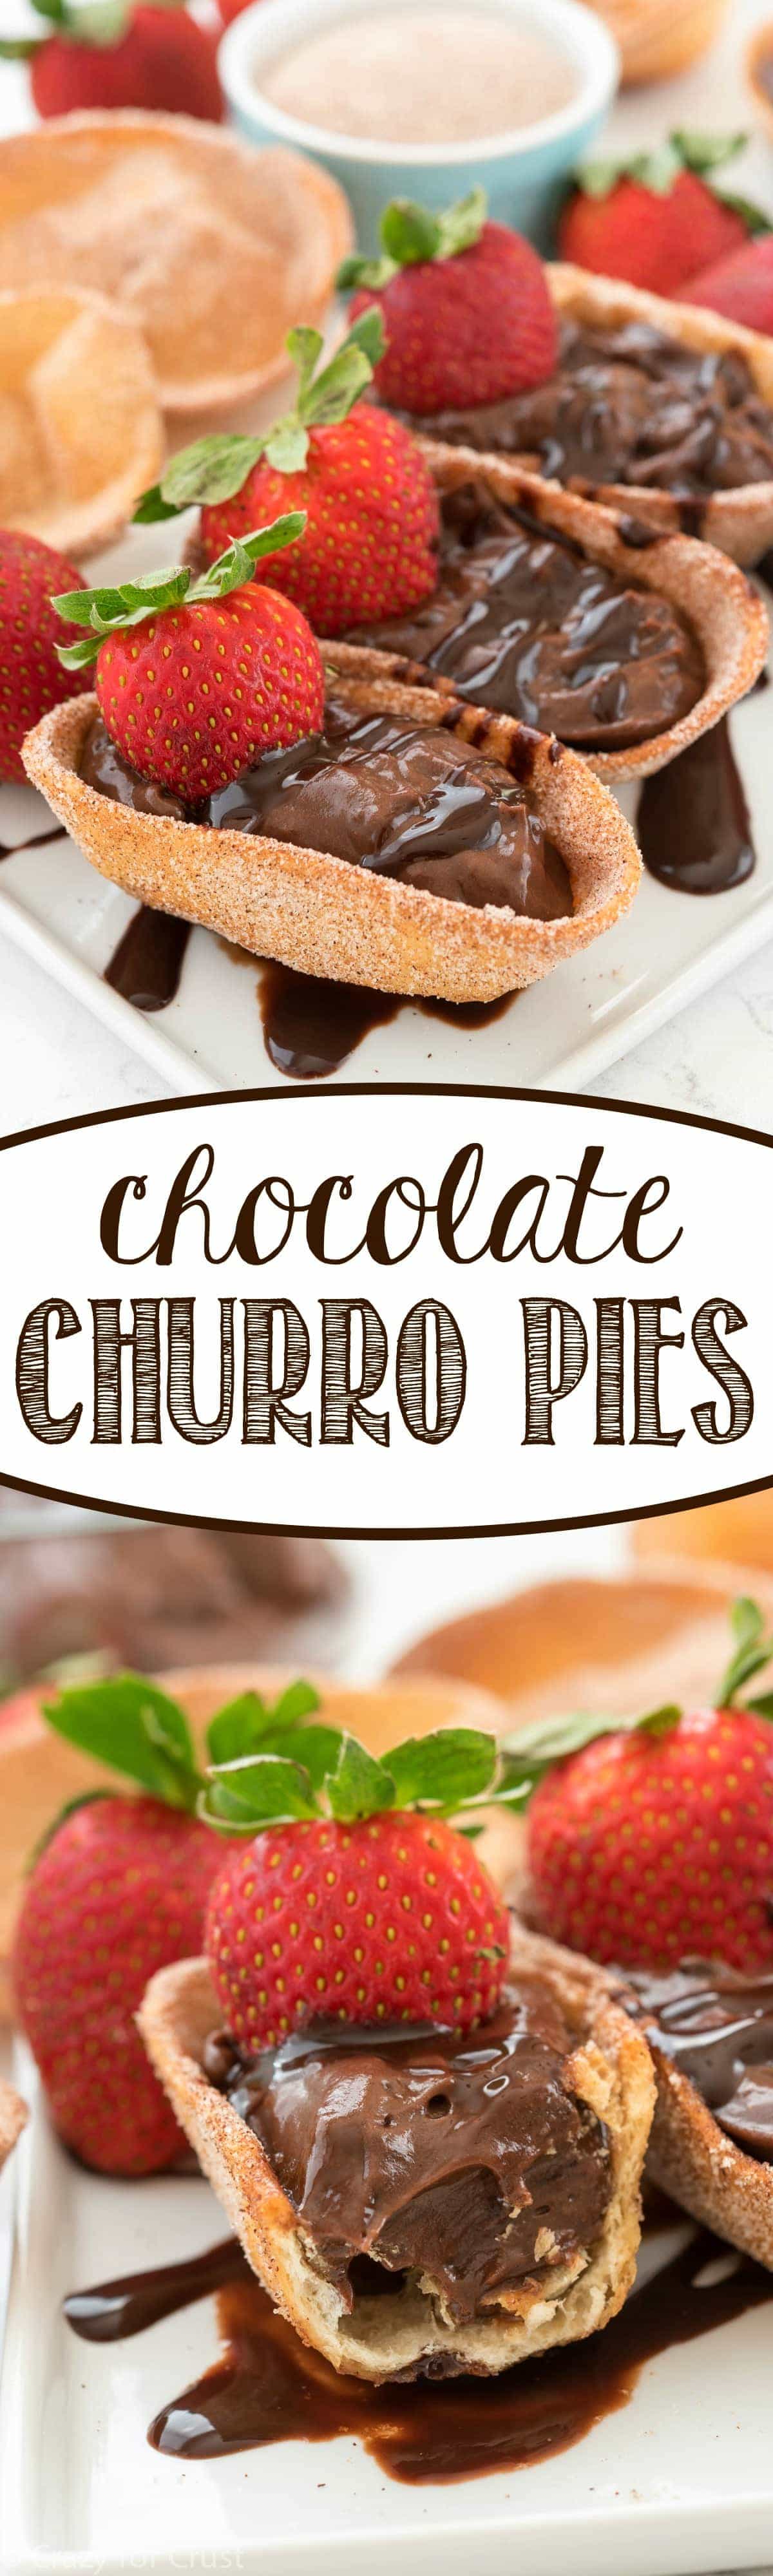 Chocolate Churro Pies collage photo